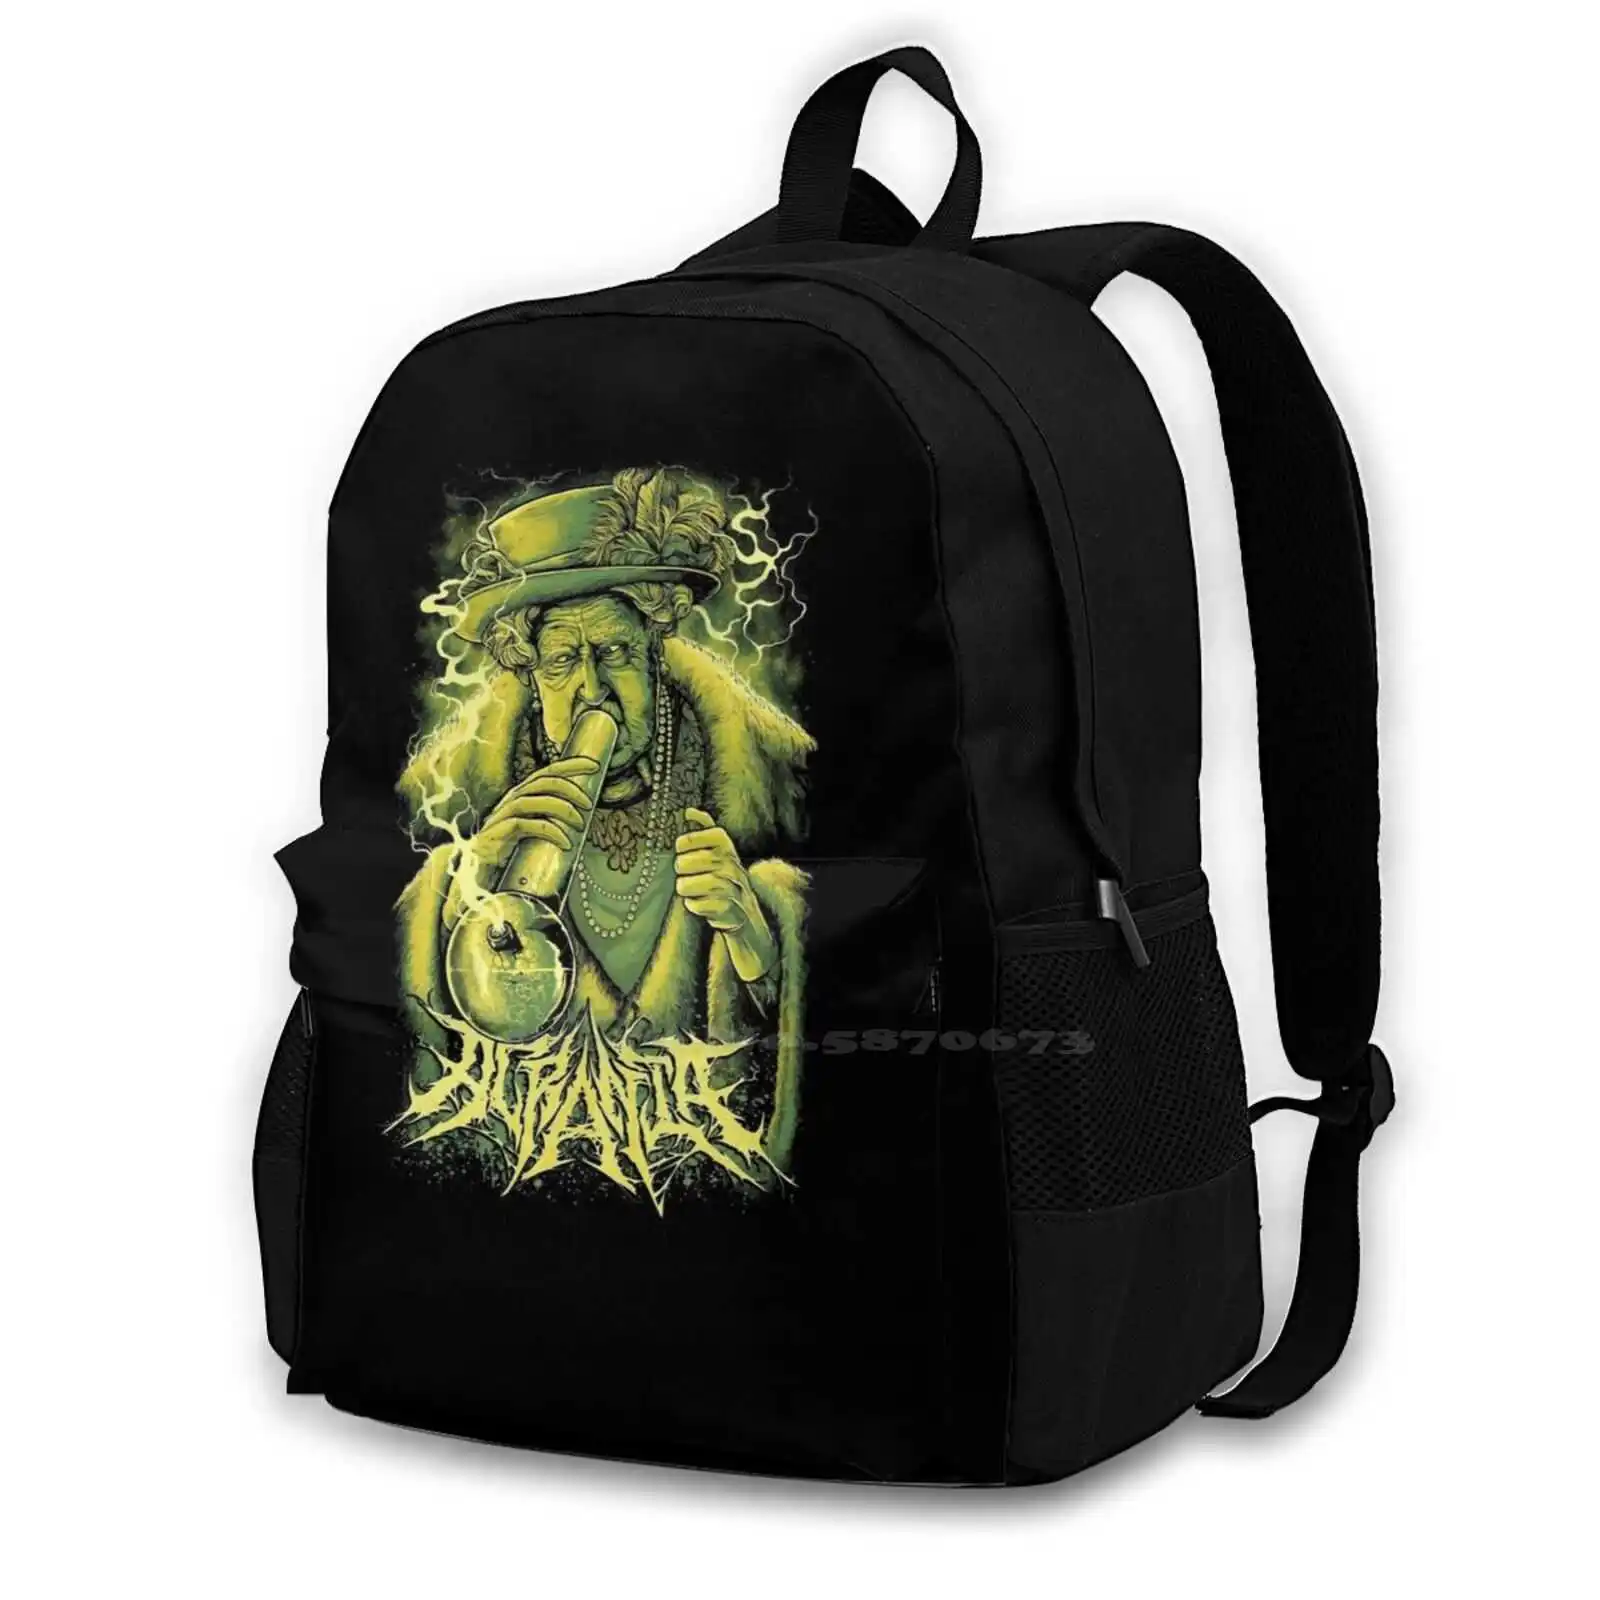 

Acrania 10 Backpack For Student School Laptop Travel Bag Deathcore Core Metalcore Nu Metal Hardcore Metal Death Metal Black